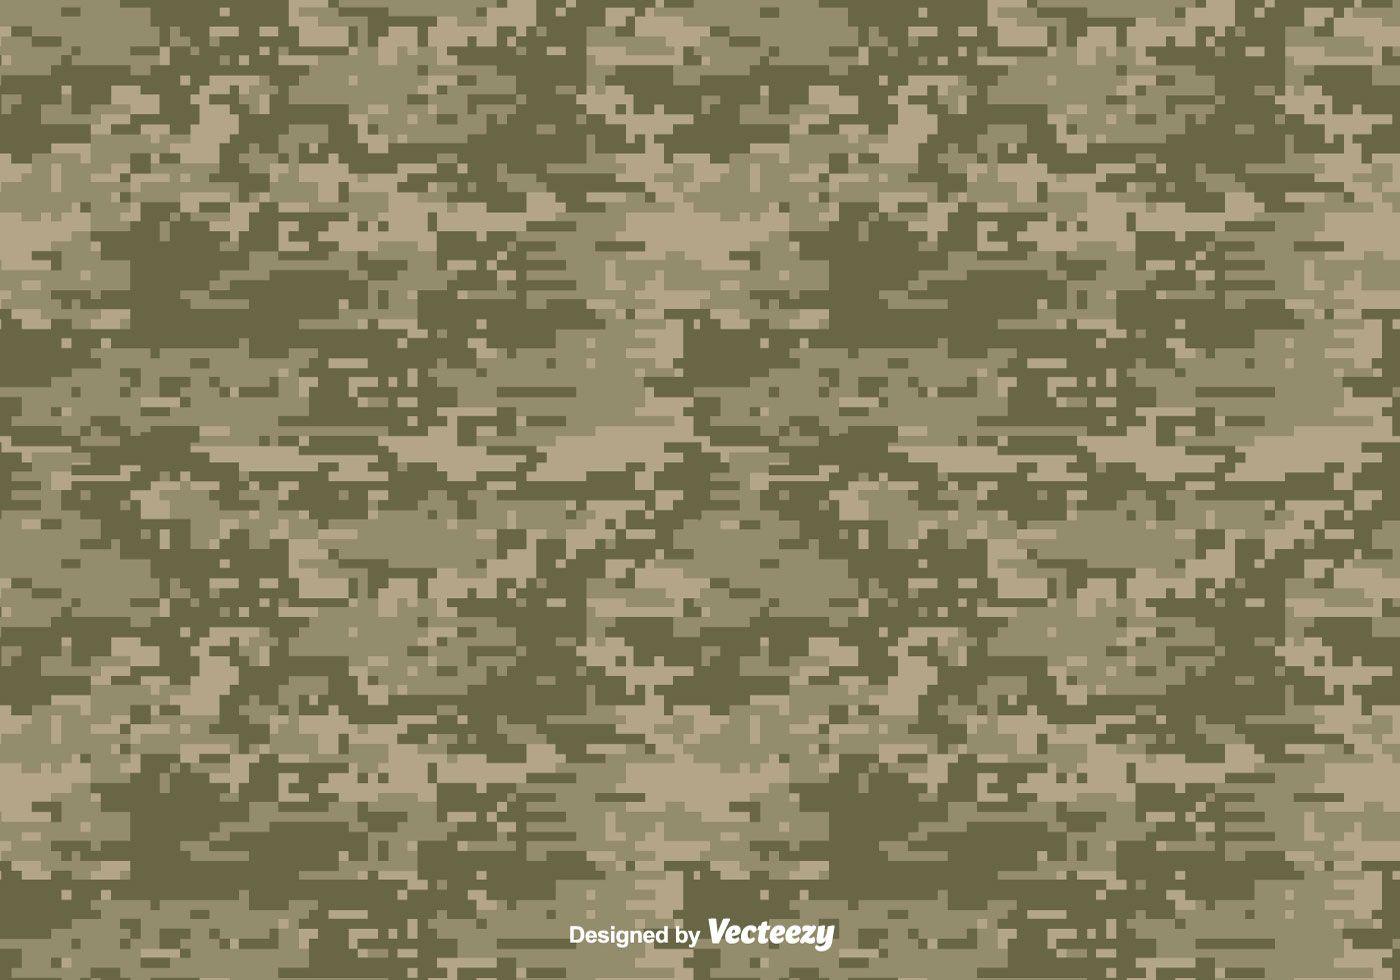 Digital Camouflage Free Vector Art - (4291 Free Downloads)